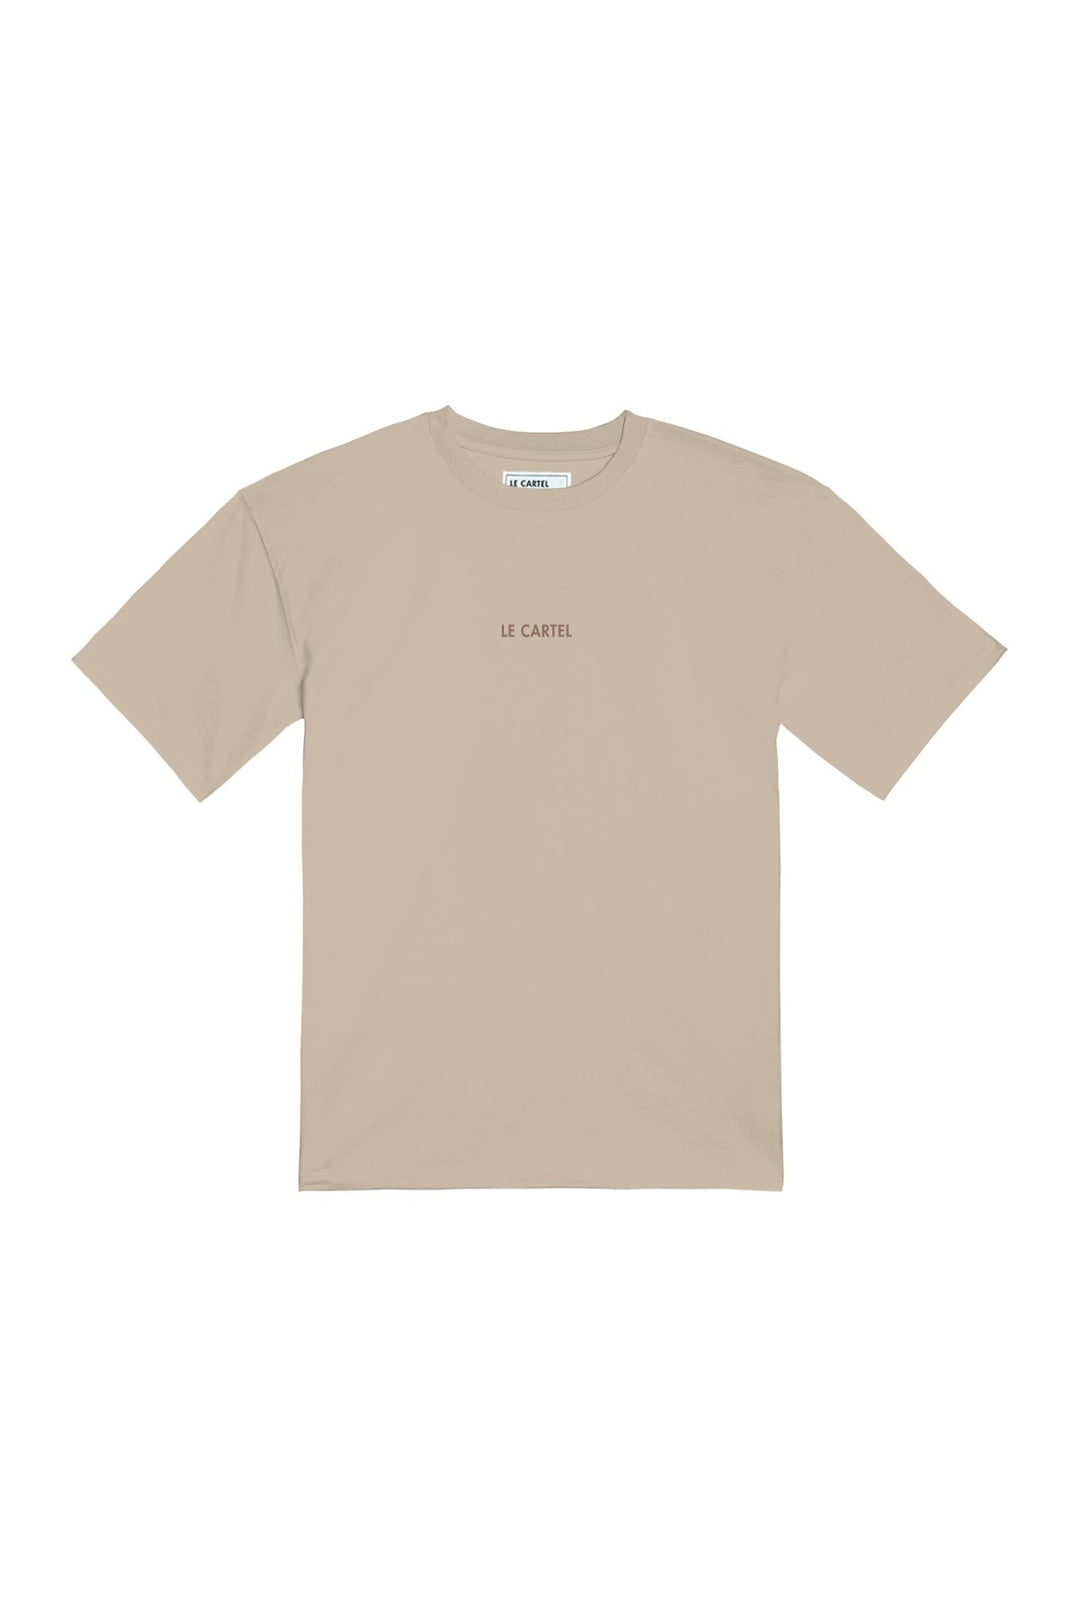 HYDRA・T - shirt unisexe・Sable - Le Cartel